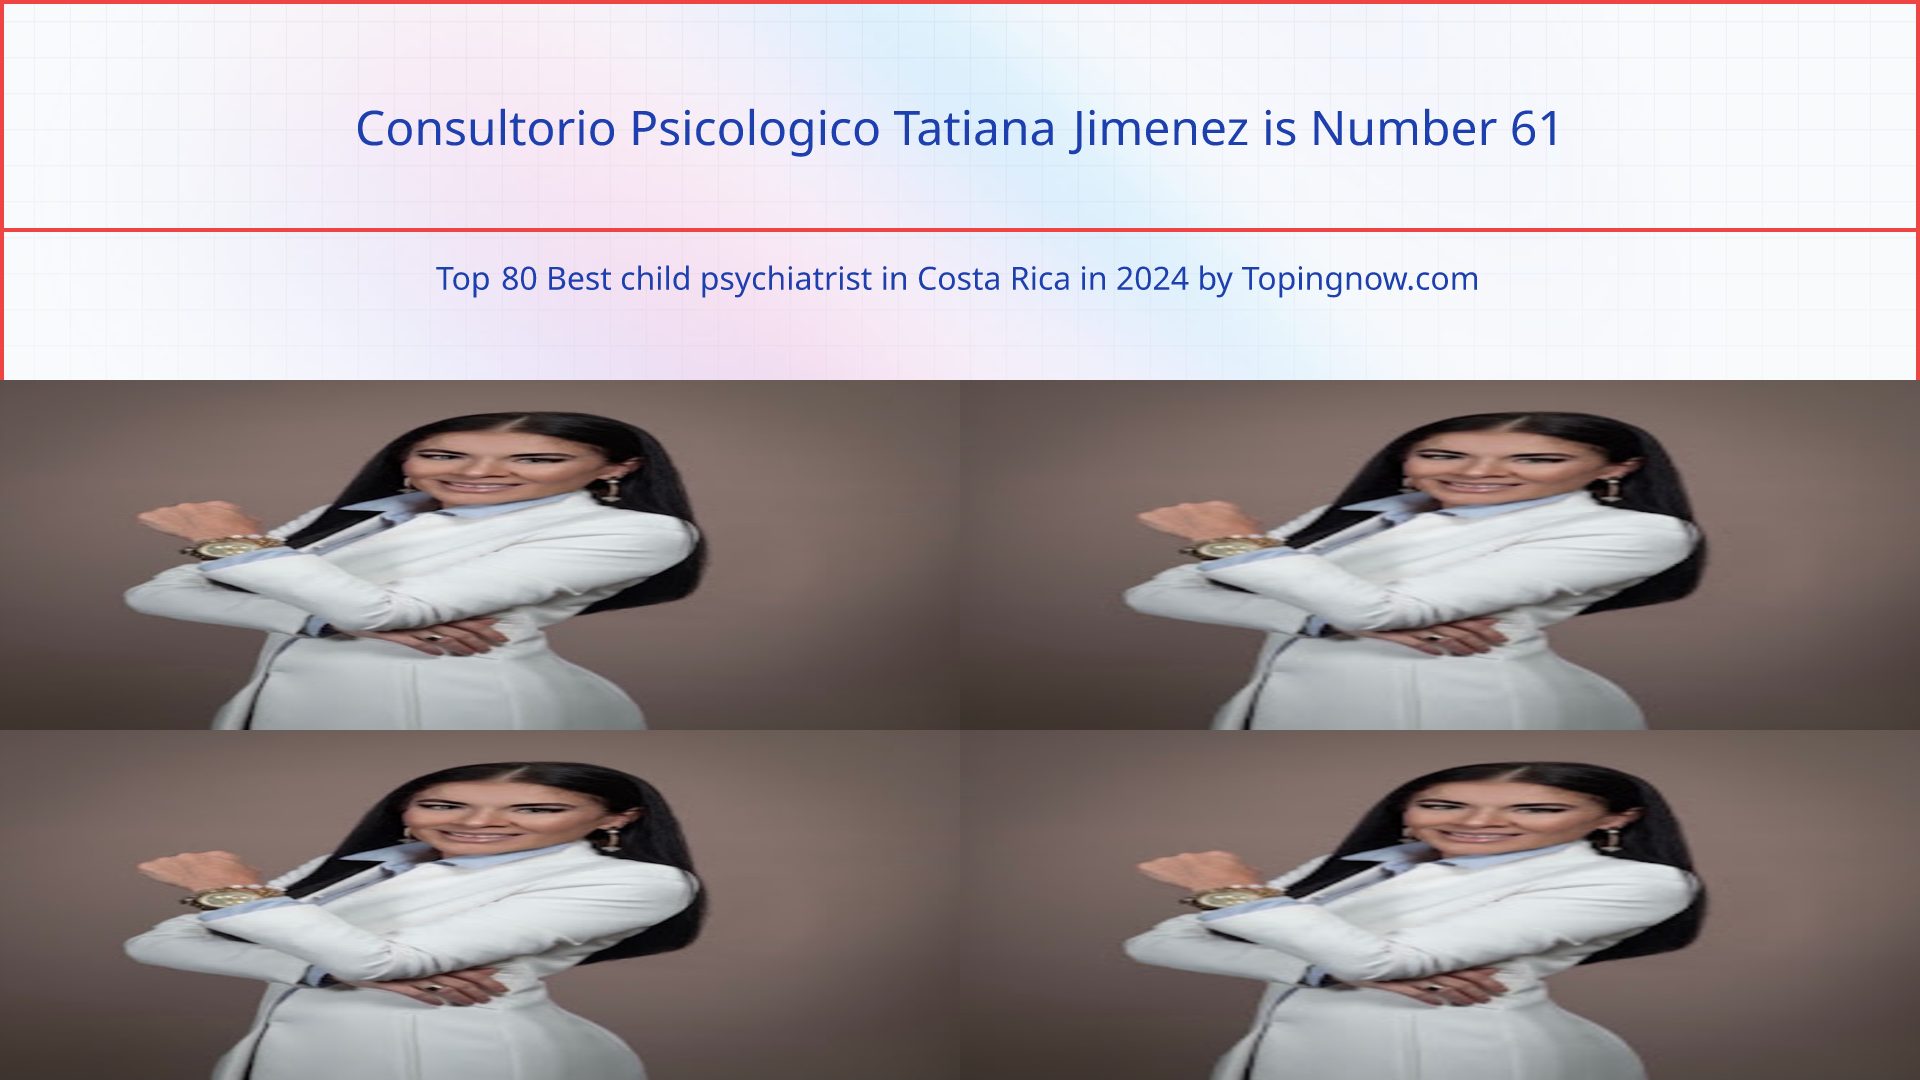 Consultorio Psicologico Tatiana Jimenez: Top 80 Best child psychiatrist in Costa Rica in 2024